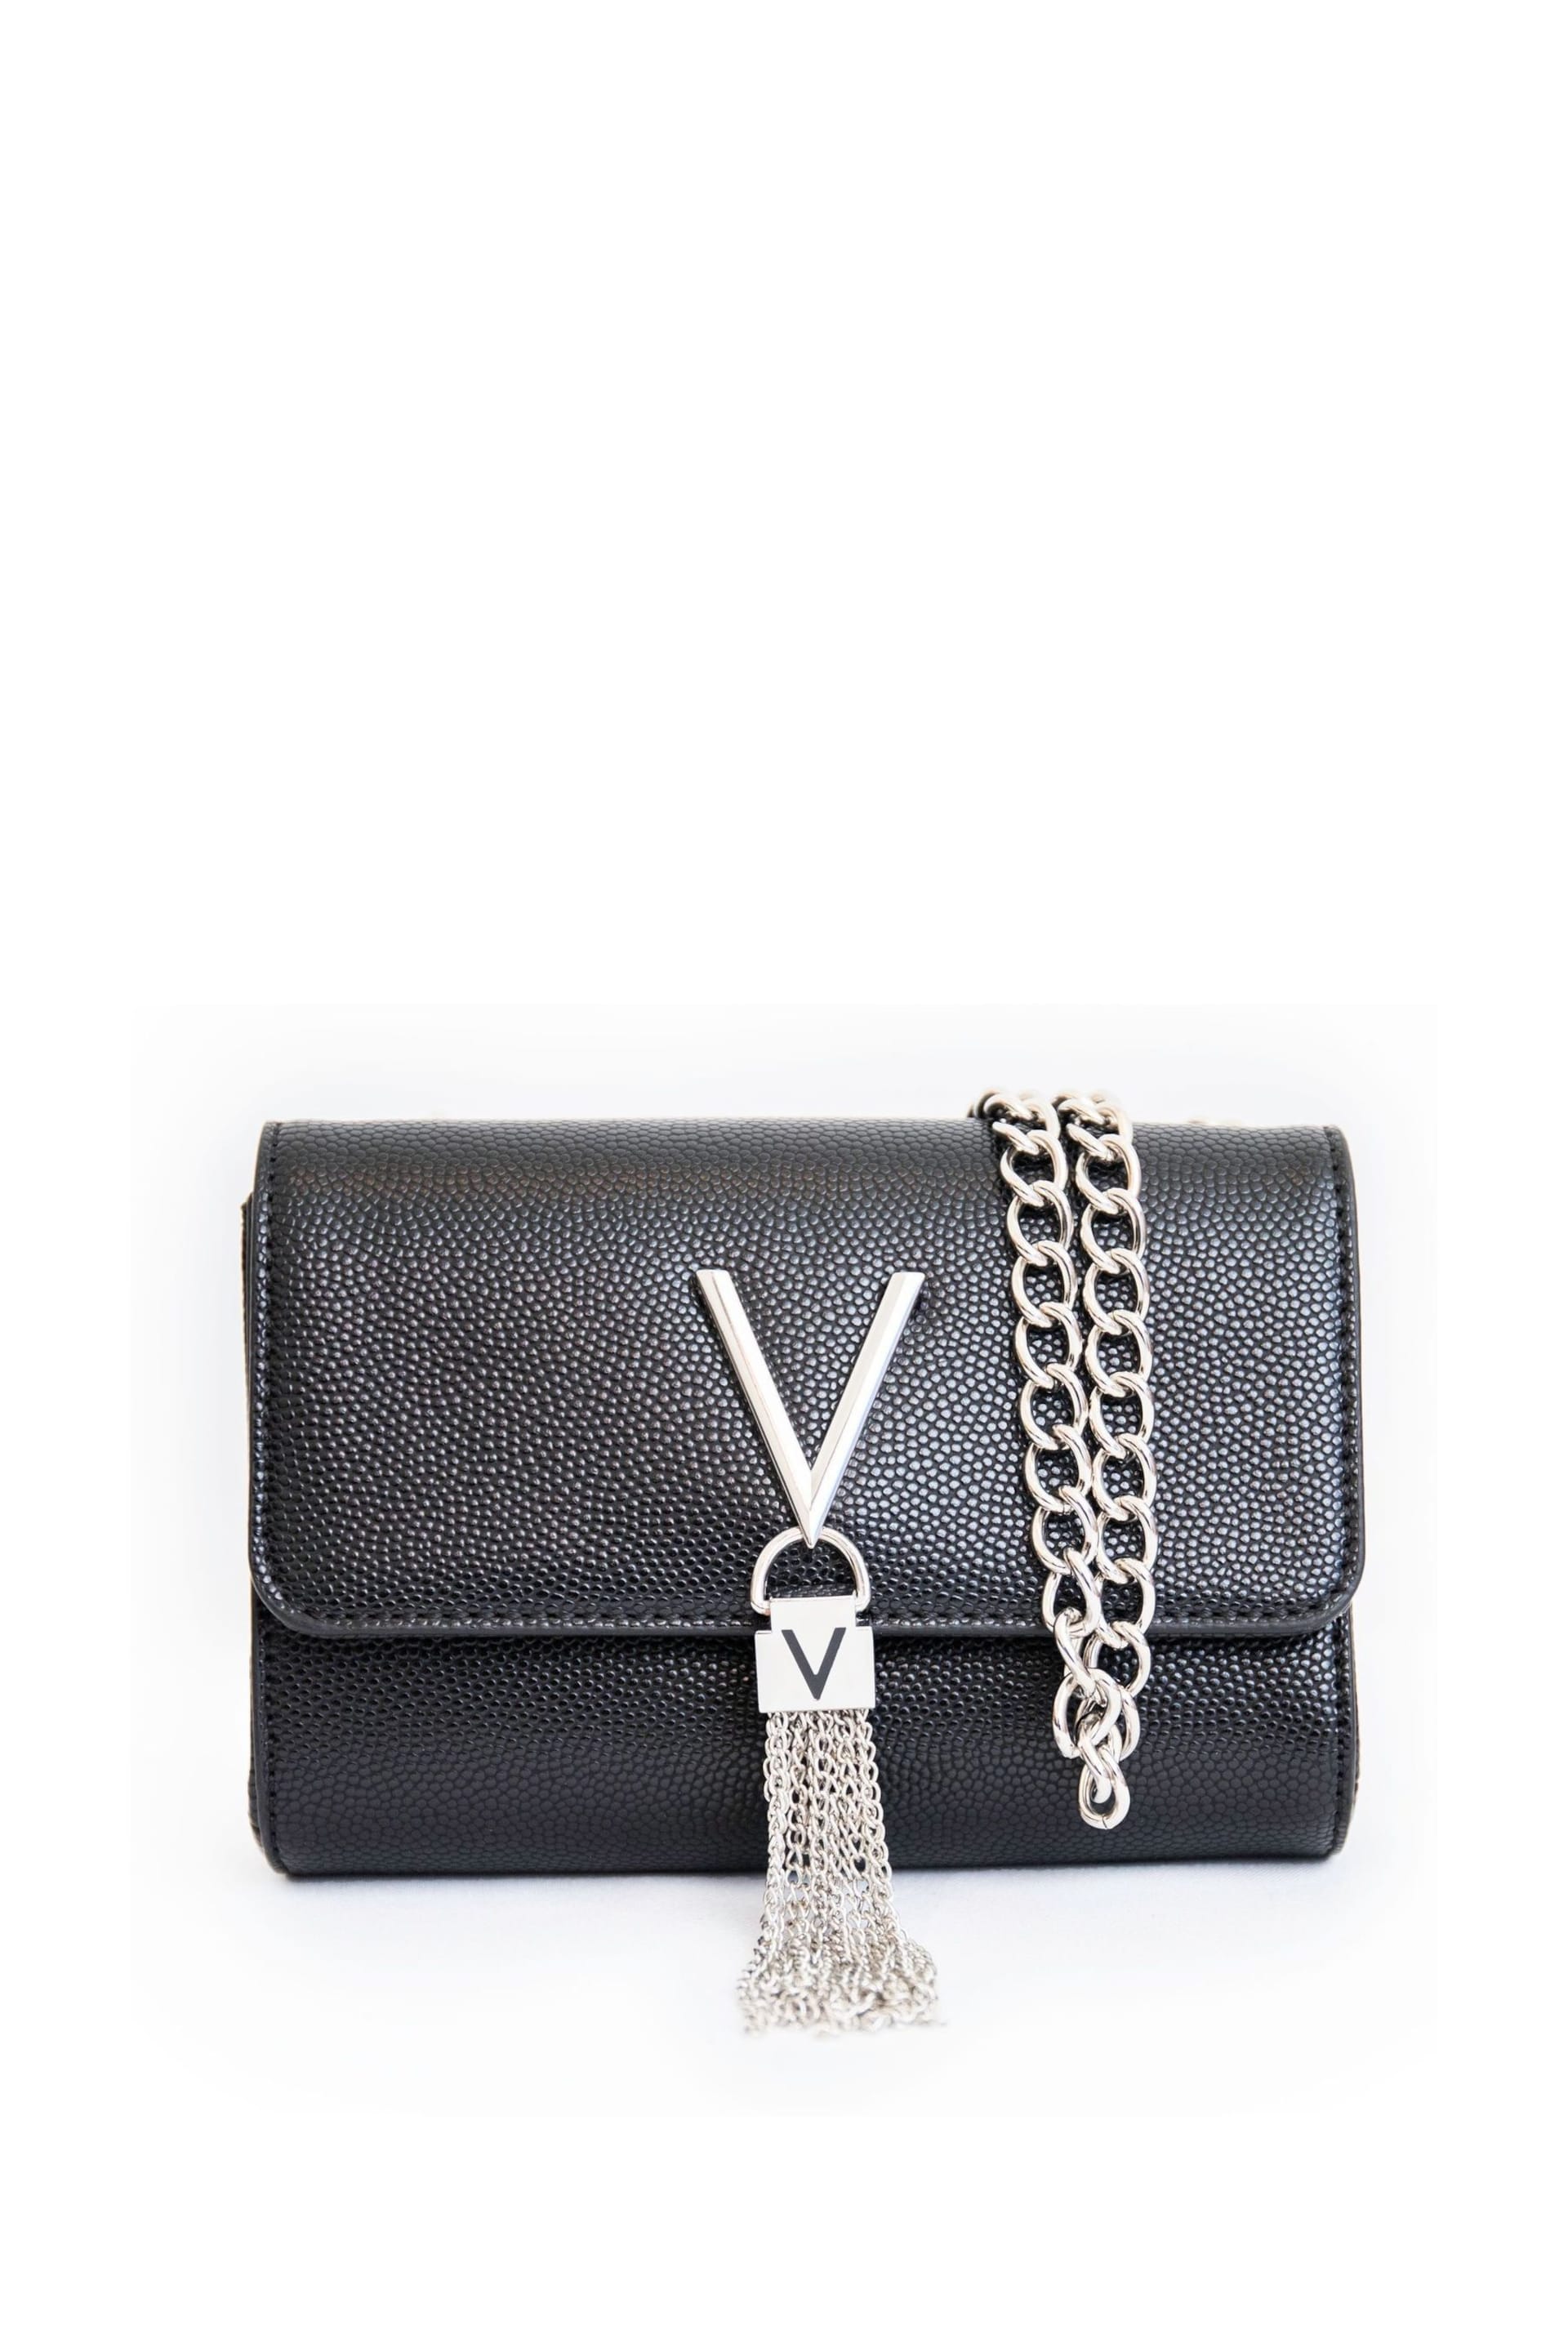 Valentino Bags Black Cross-Body Divina Tassel Bag - Image 4 of 5